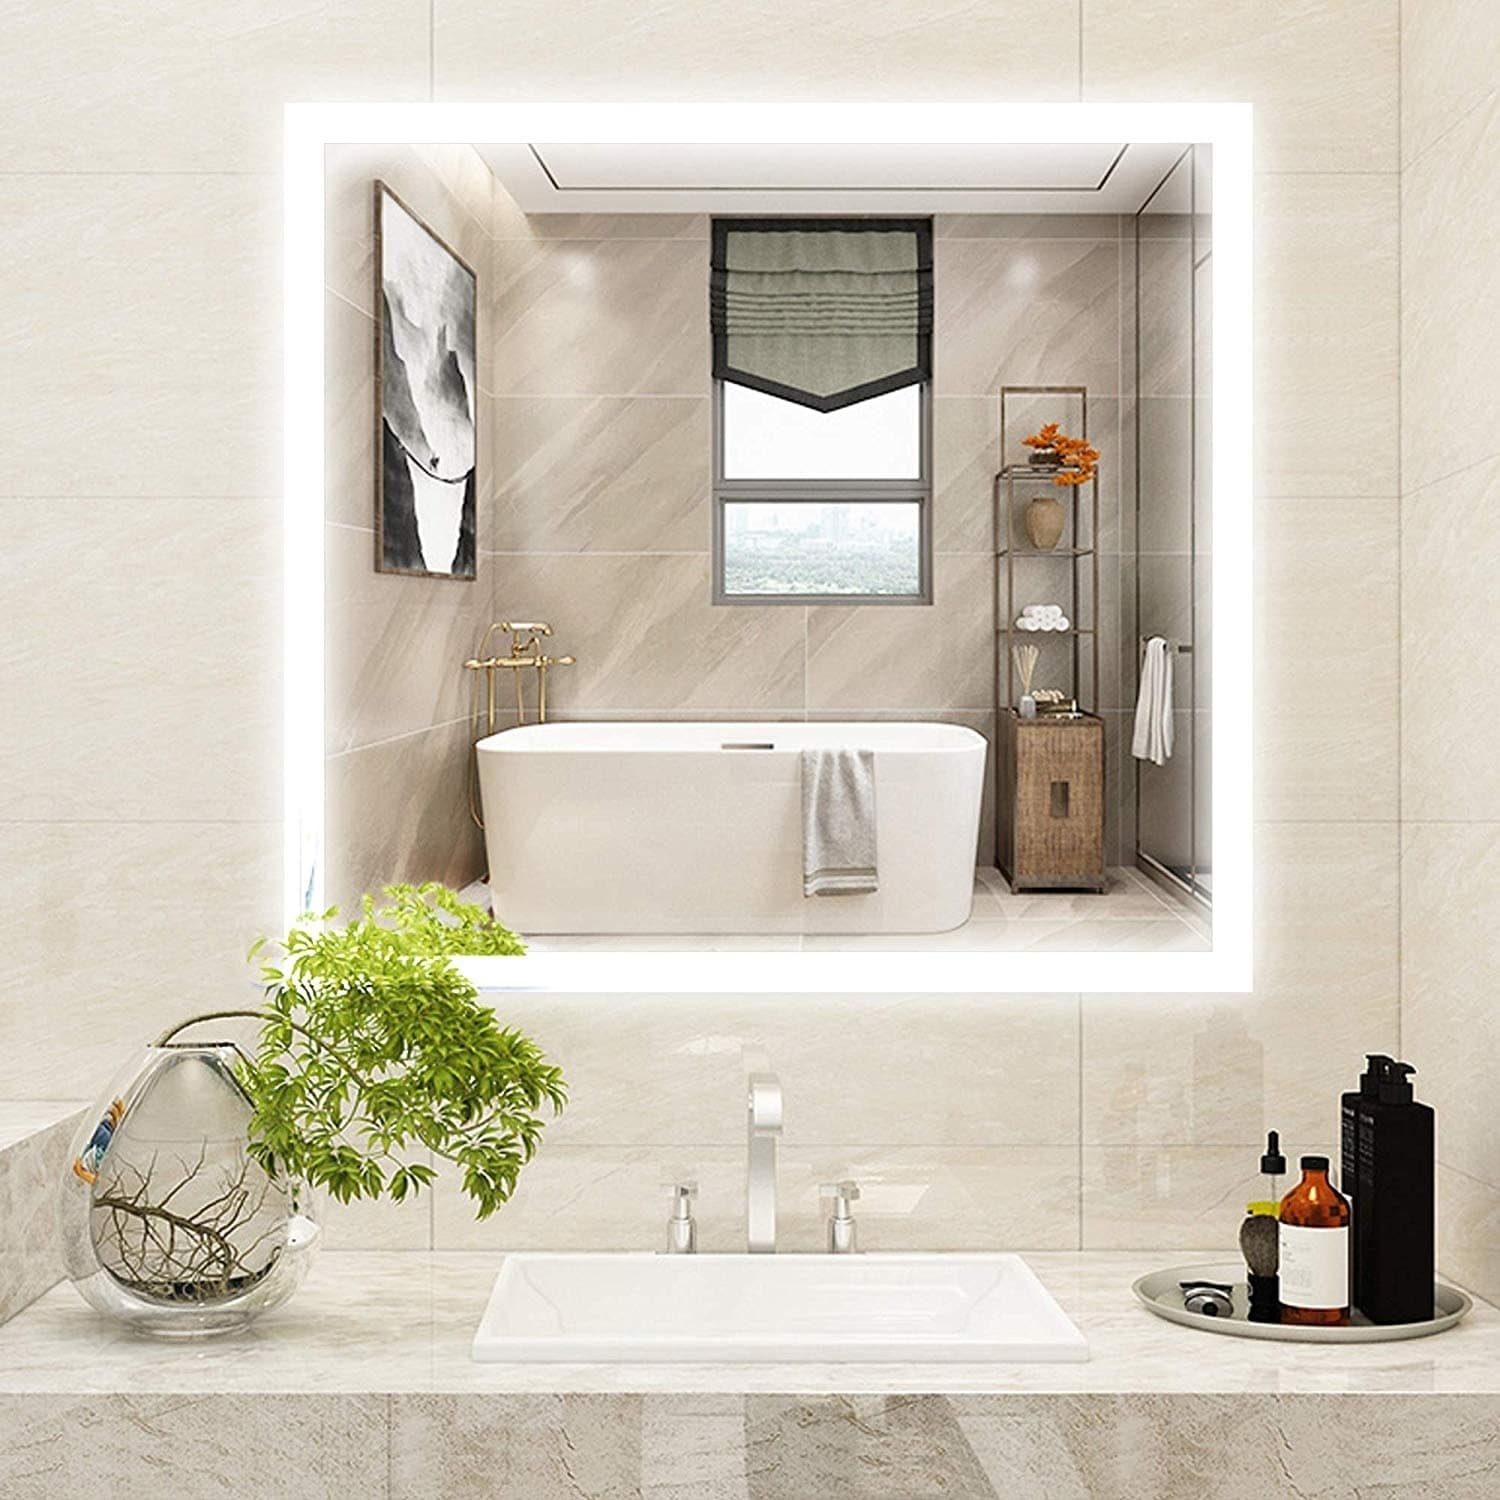 LED Illuminated Bathroom Mirrors and Bathroom Cabinets